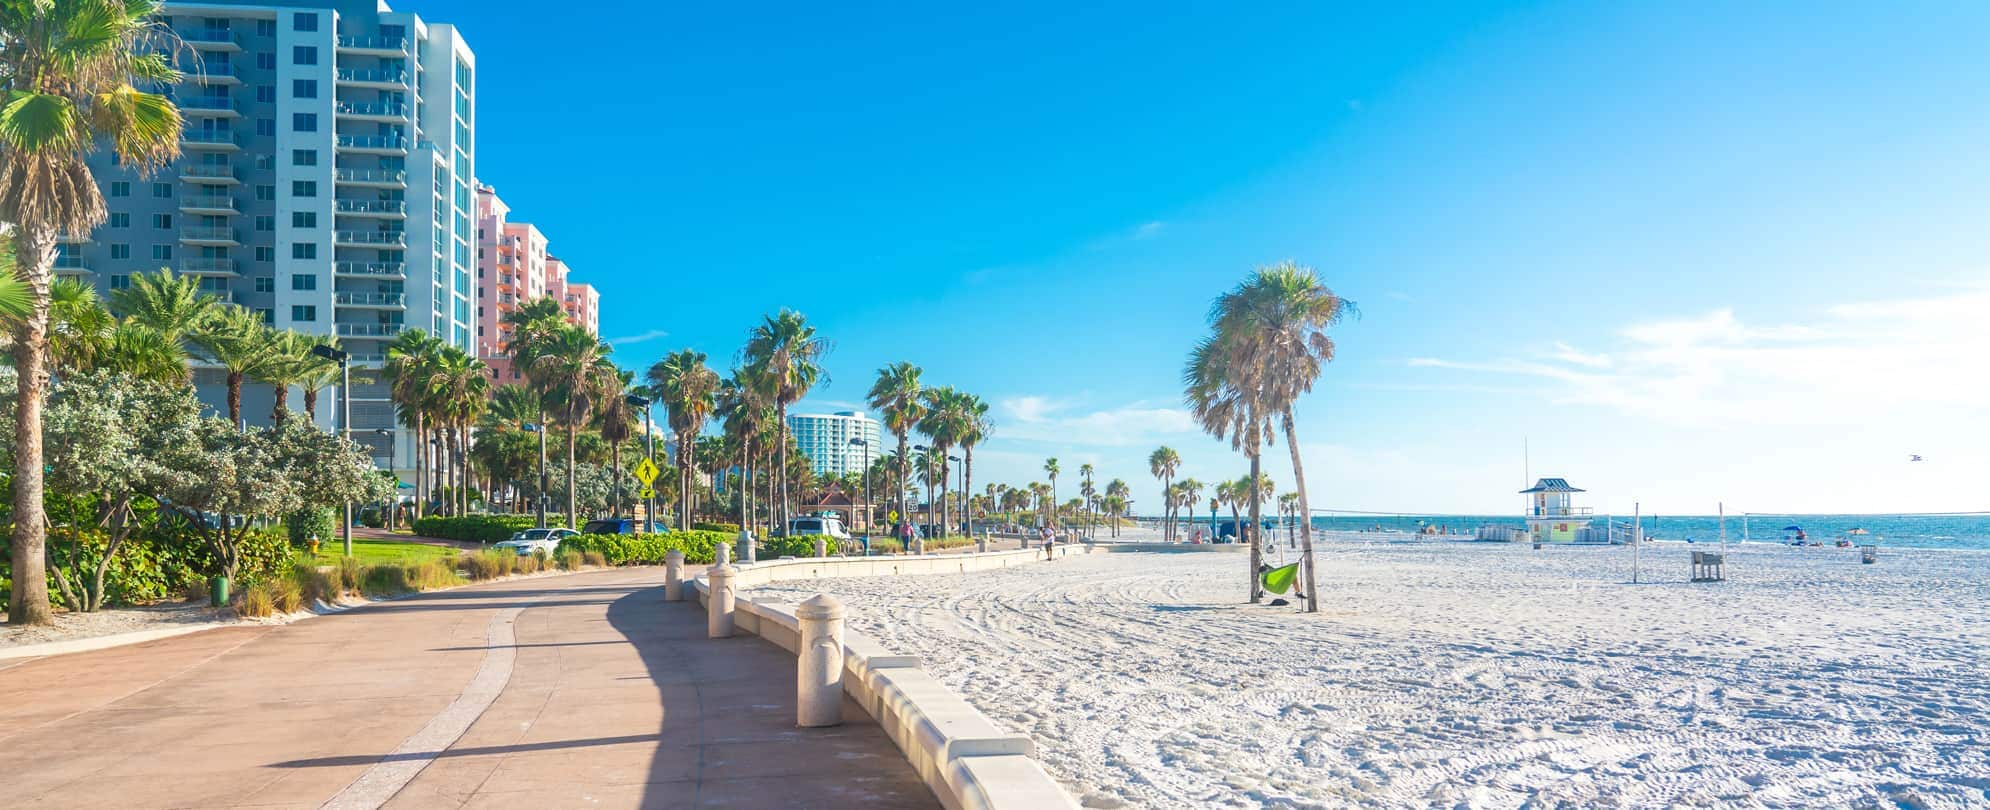 South Beach Boardwalk in Miami, Florida 